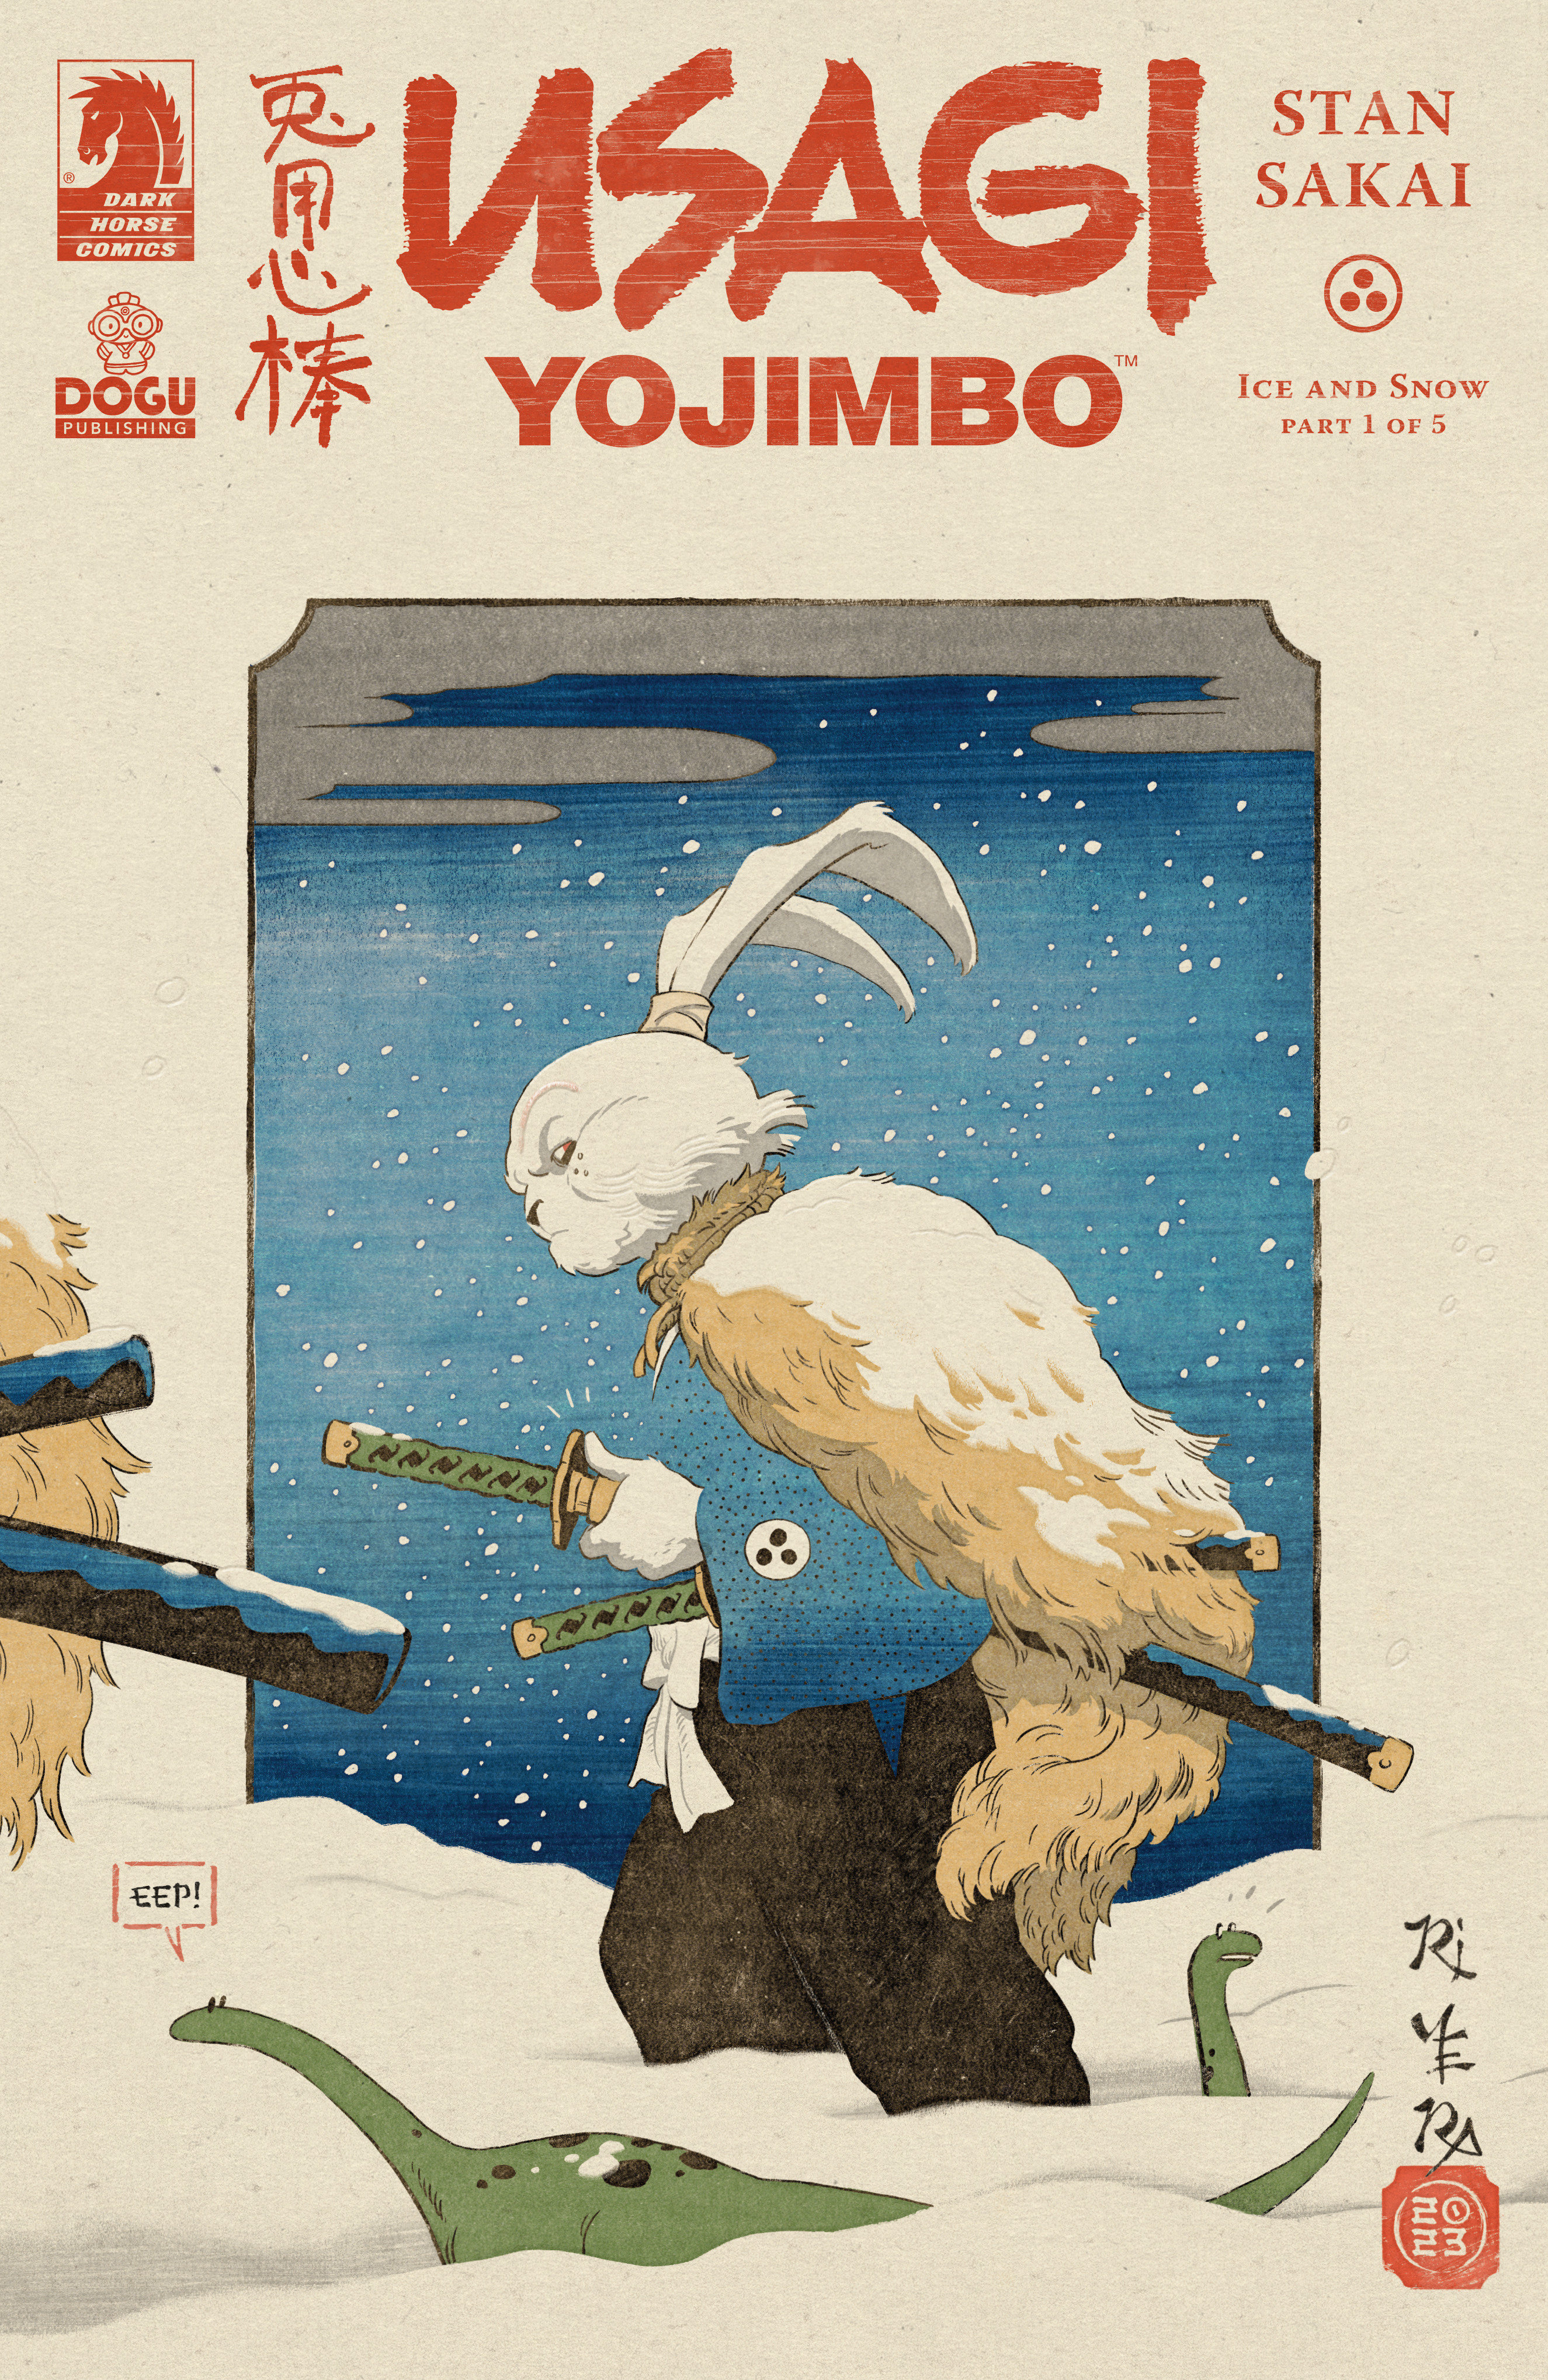 Usagi Yojimbo: Ice & Snow #1 Cover C 1 for 25 Incentive Cover (Paolo Rivera)